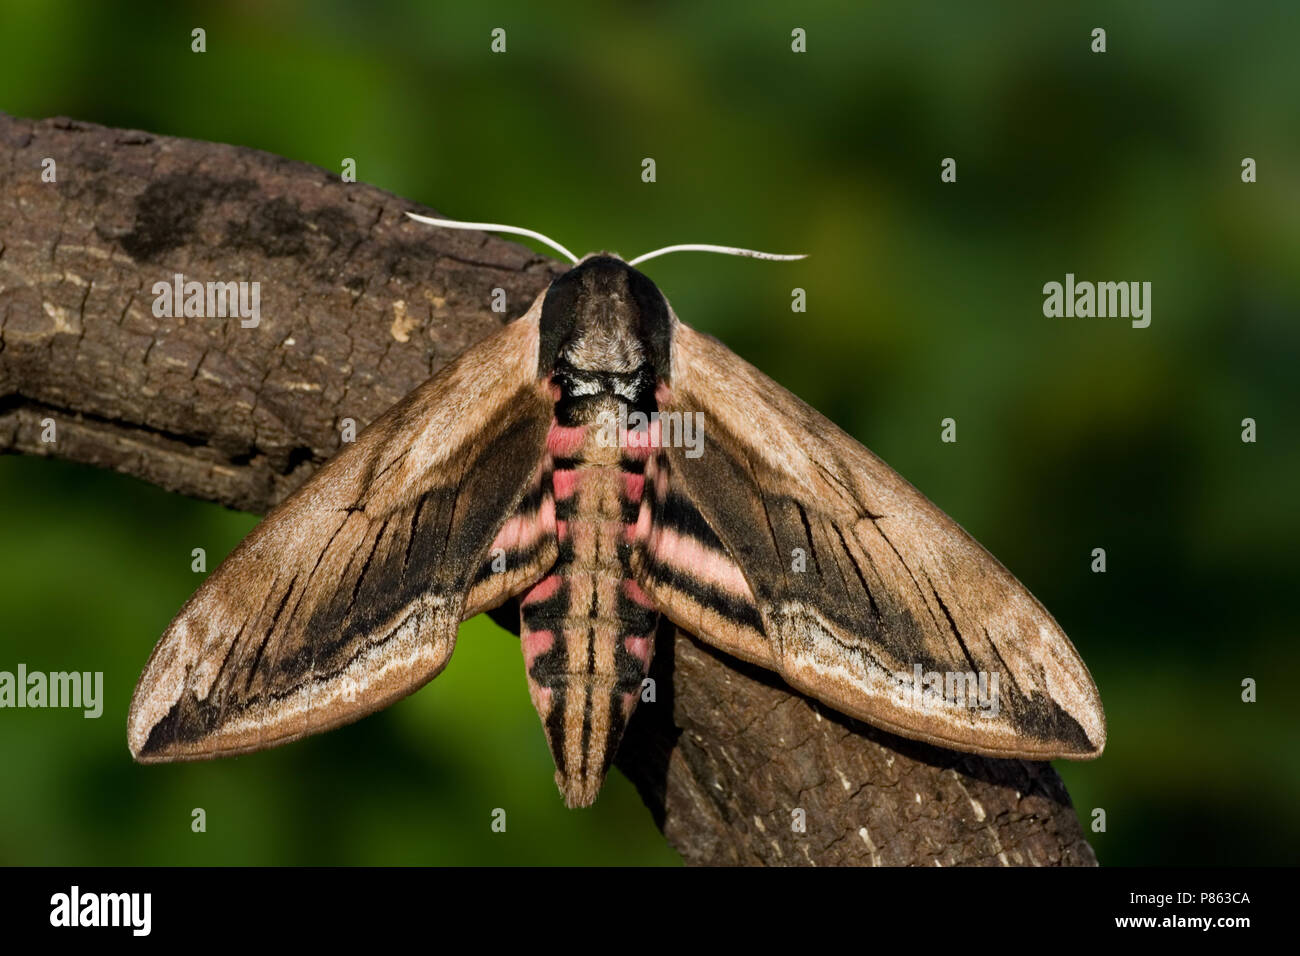 Privet Hawk-moth on branch Netherlands, Ligusterpijlstaart op tak Nederland Stock Photo